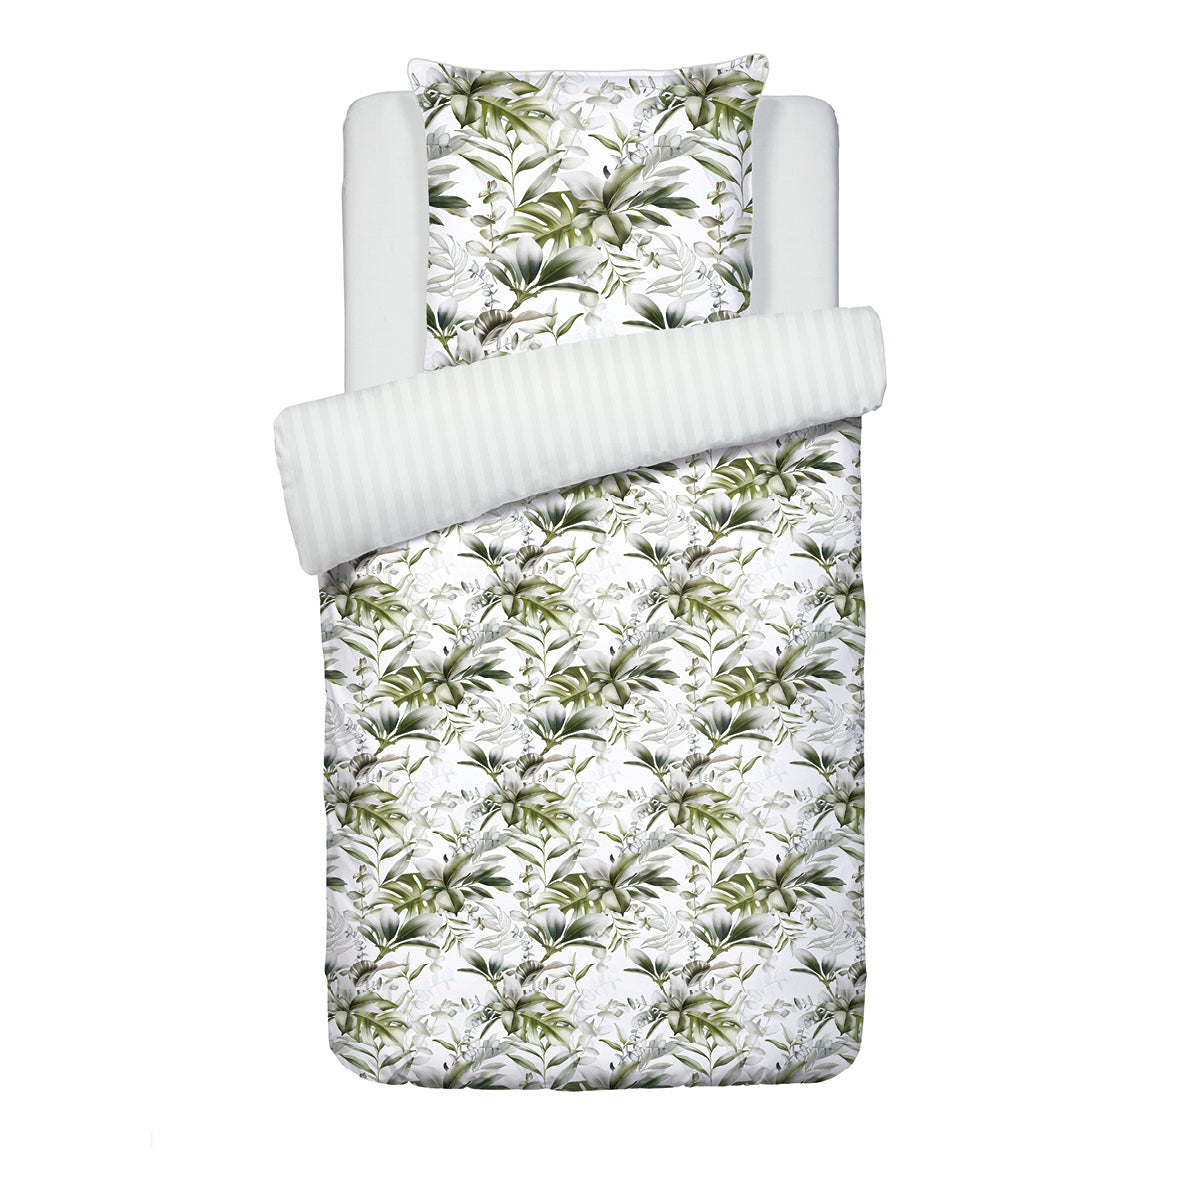 Duvet cover + pillowcase(s) cotton satin - Jardin Exotique white